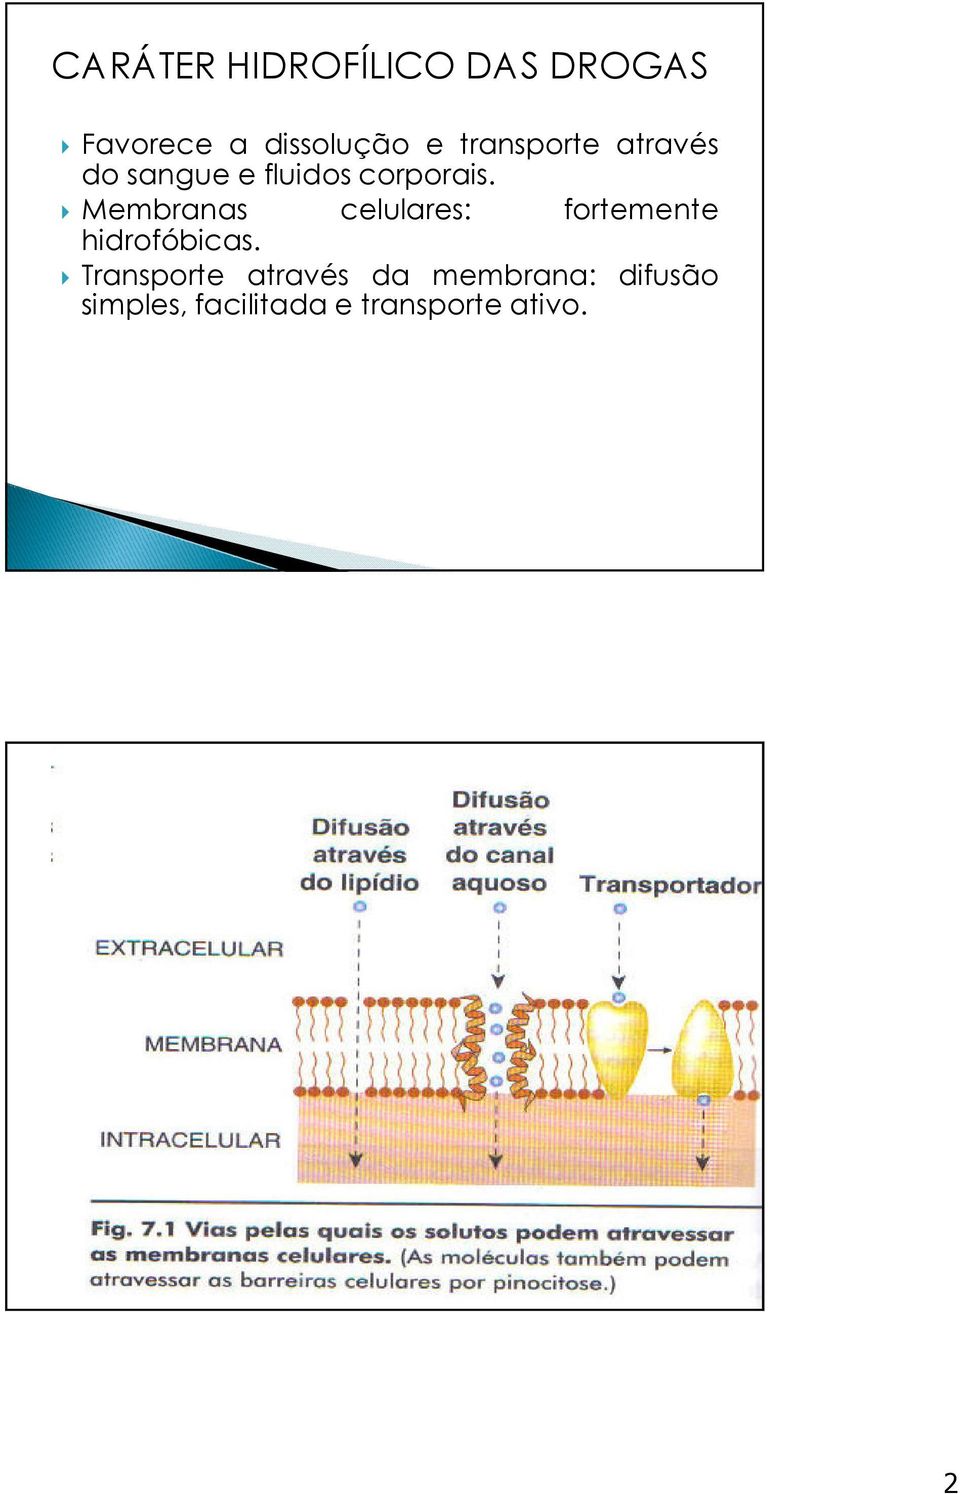 Membranas celulares: fortemente hidrofóbicas.